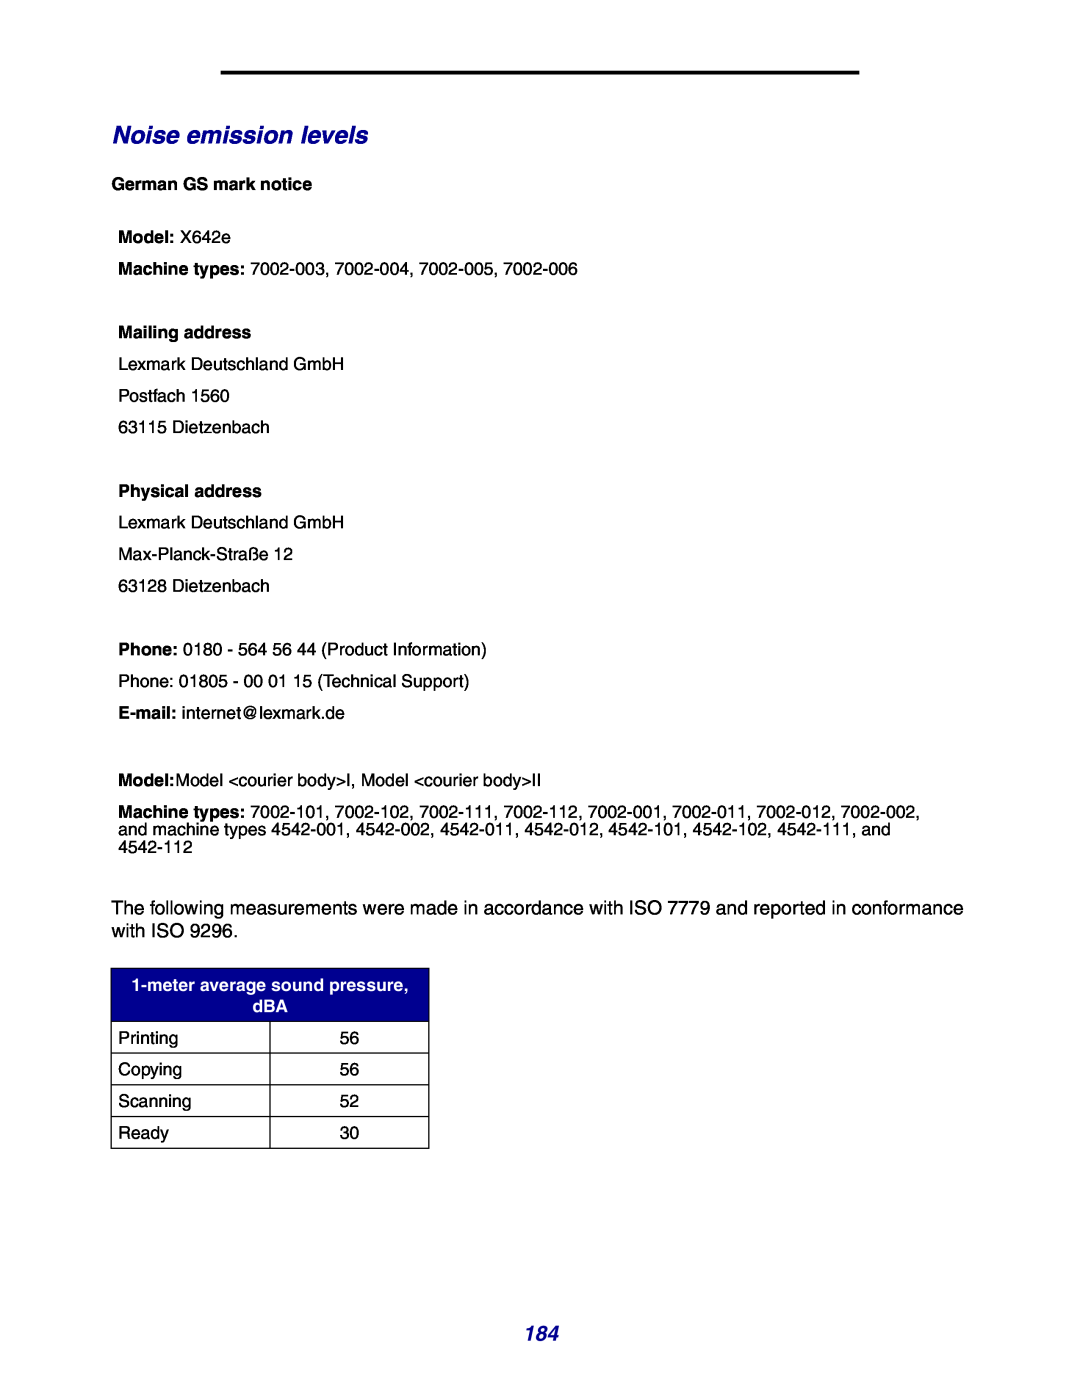 Lexmark manual Noise emission levels, German GS mark notice Model X642e, Mailing address, Physical address 